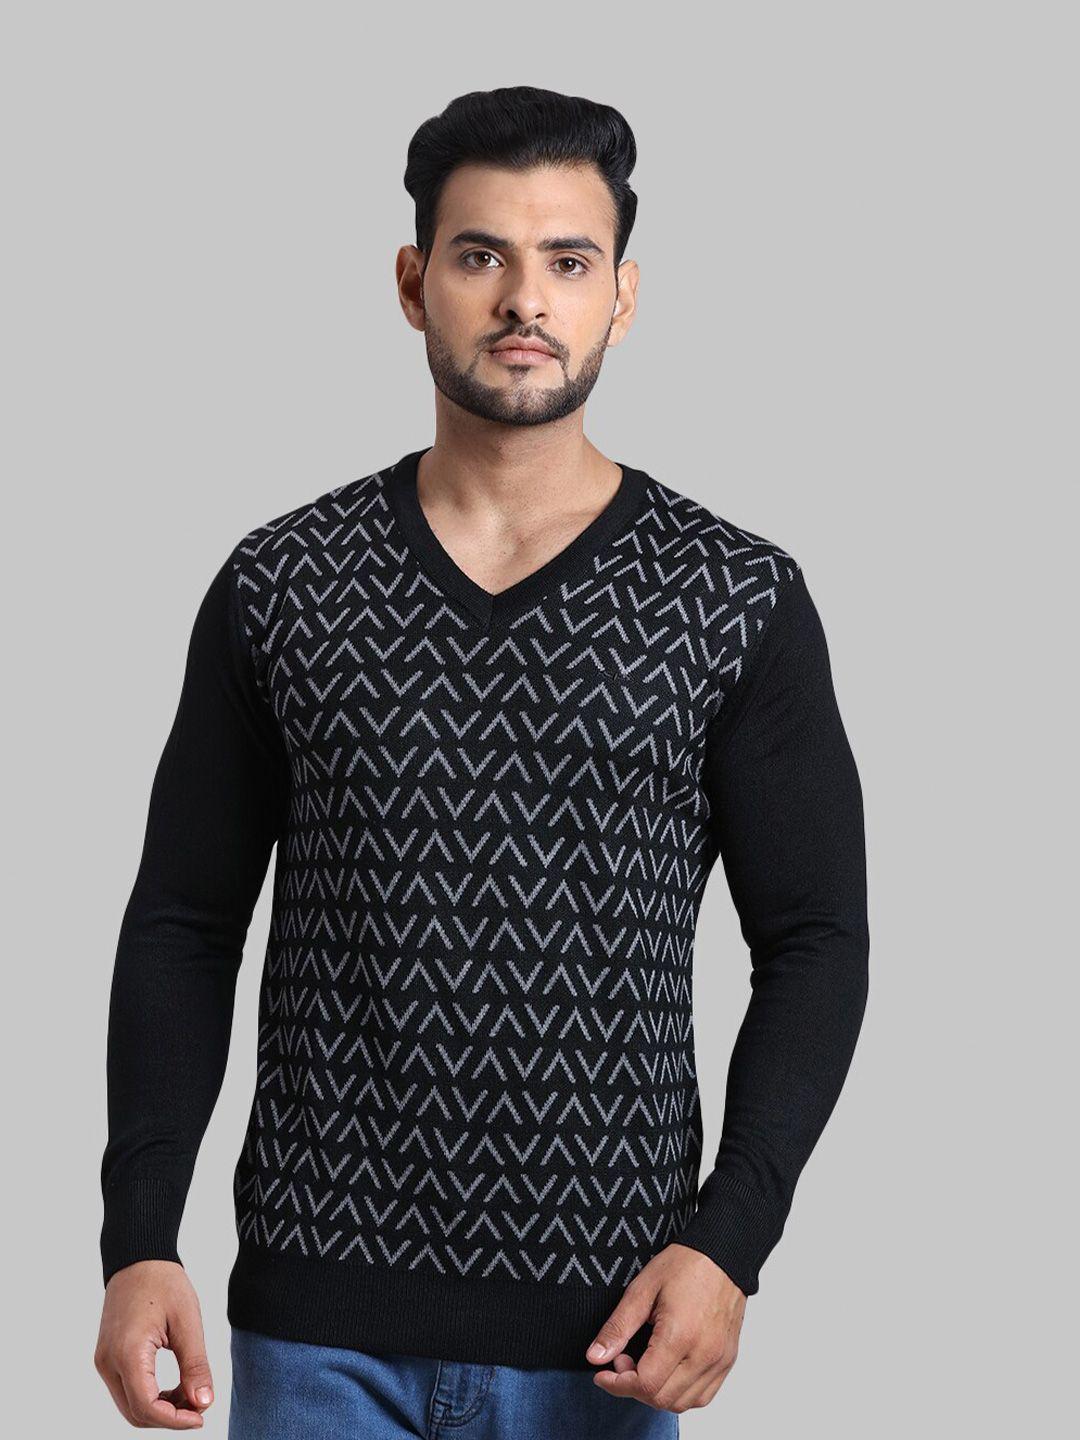 colorplus men black and grey geometric printed long sleeves acrylic sweater